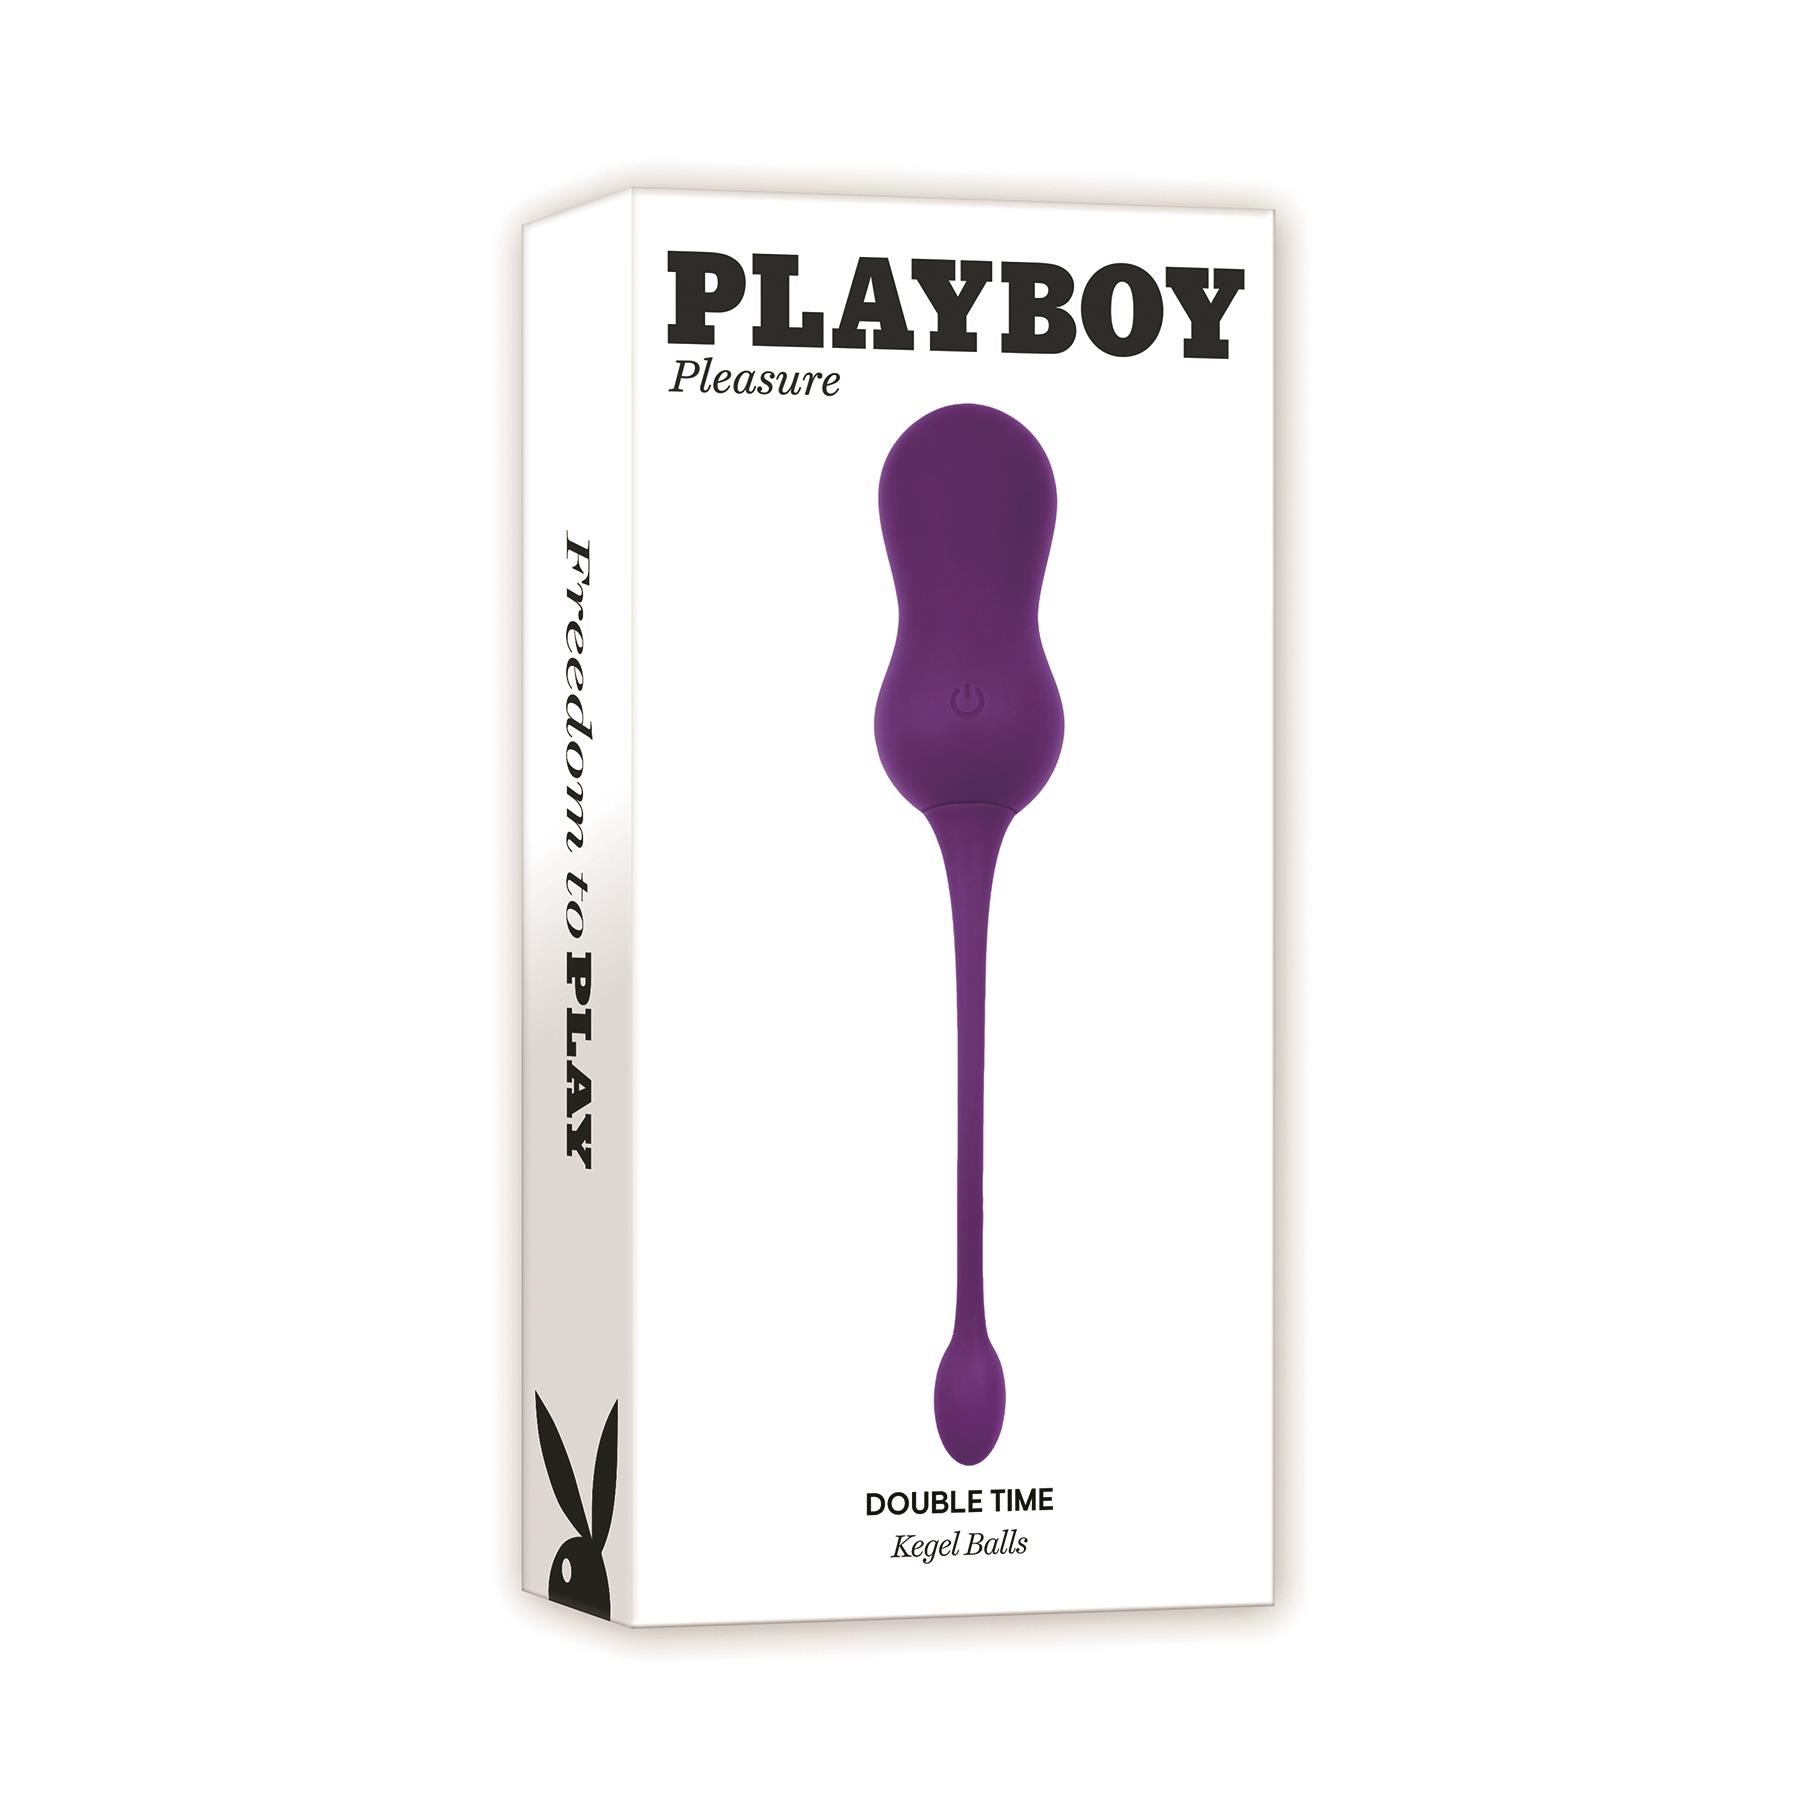 Playboy Pleasure Double Time Vibrating Kegel Exerciser - Packaging